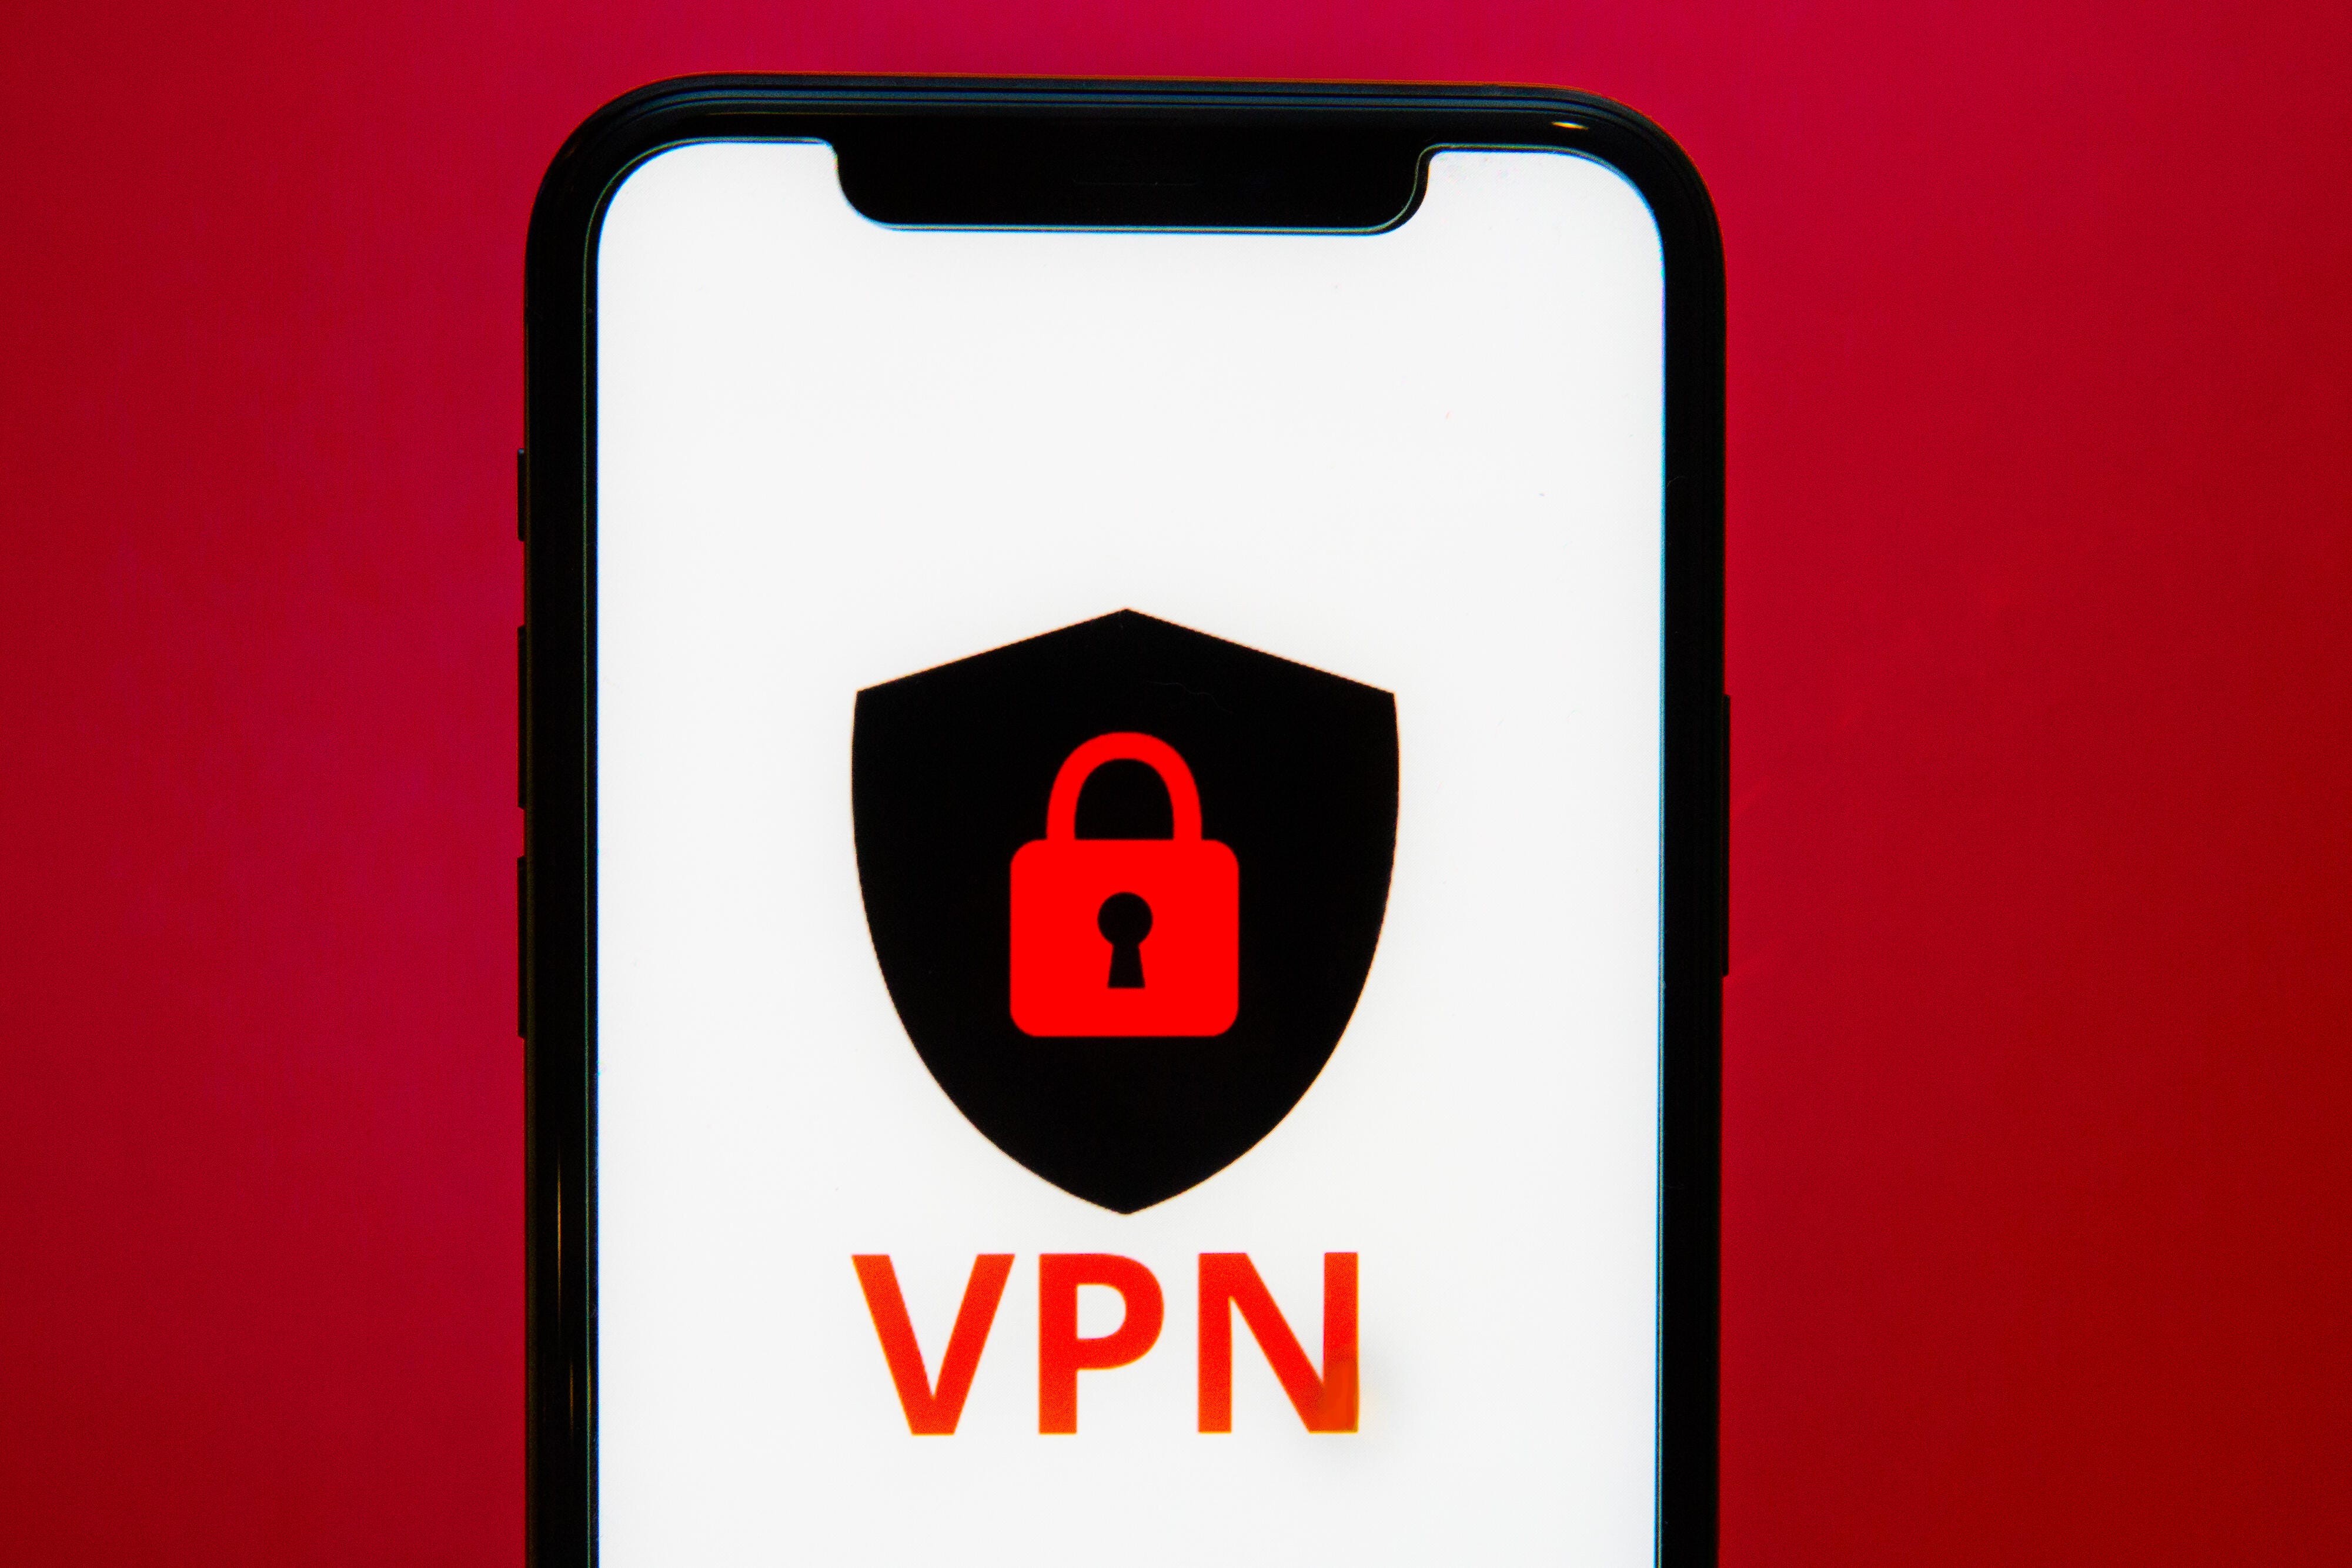 014-vpn-generic-logo-on-phone-security-2021